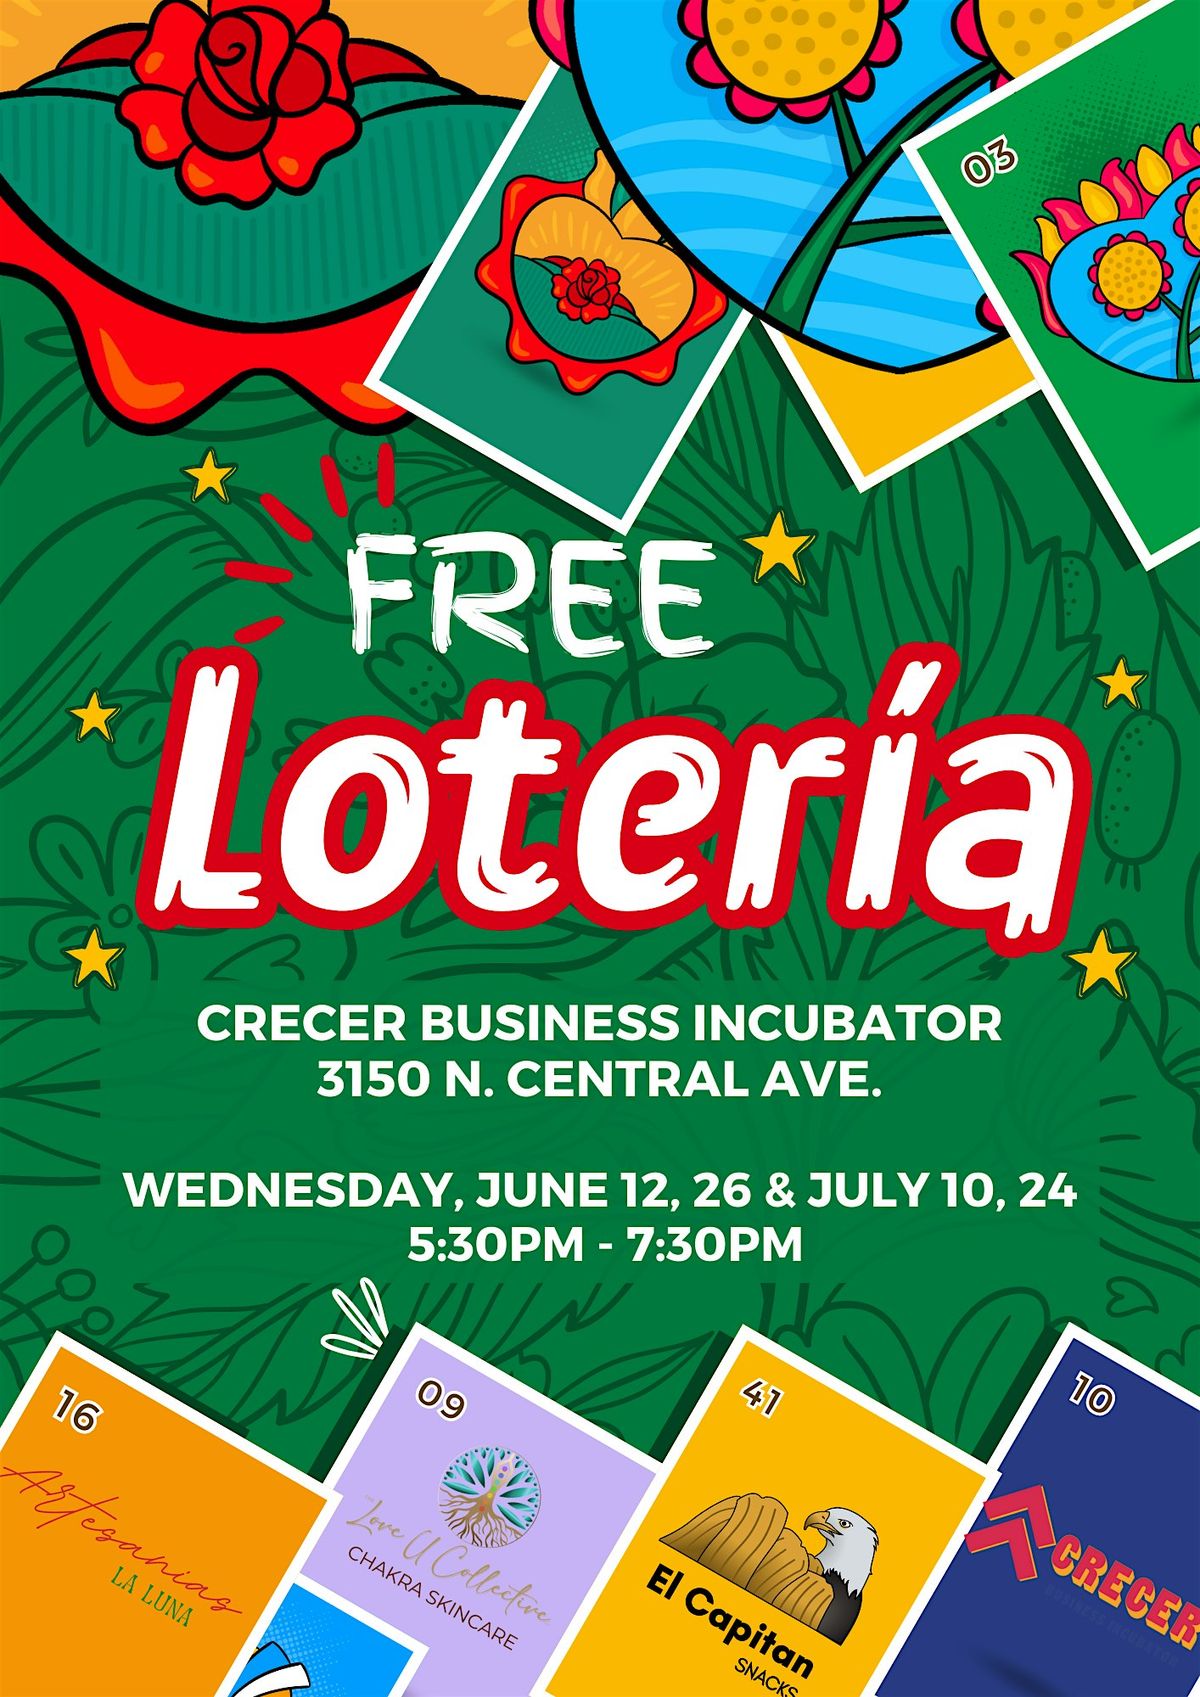 FREE Loteria at Crecer Business Incubator